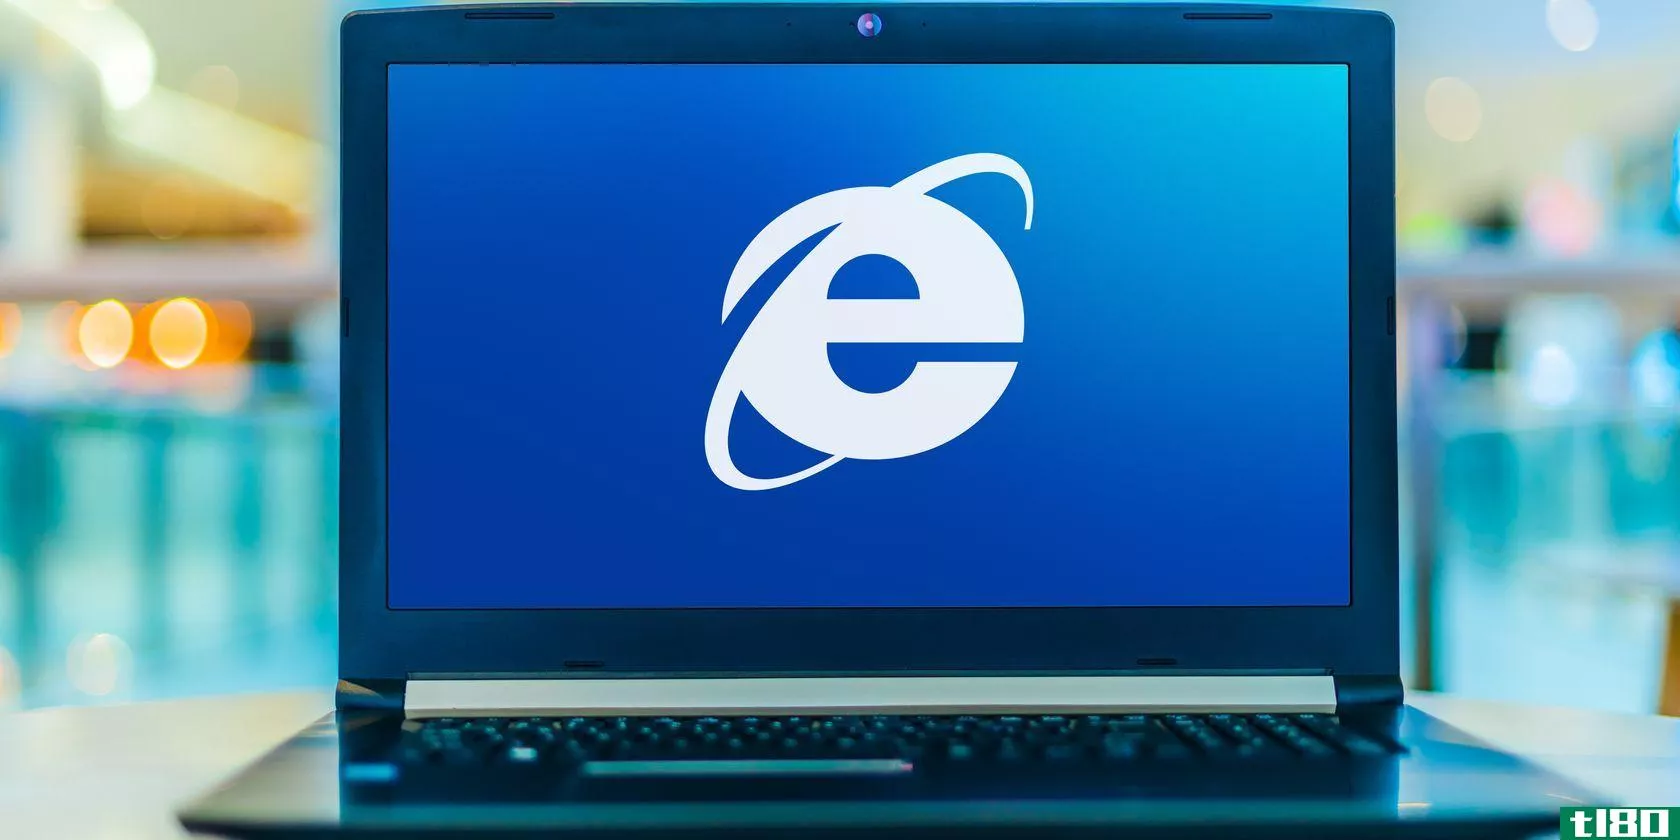 Internet Explorer on a laptop